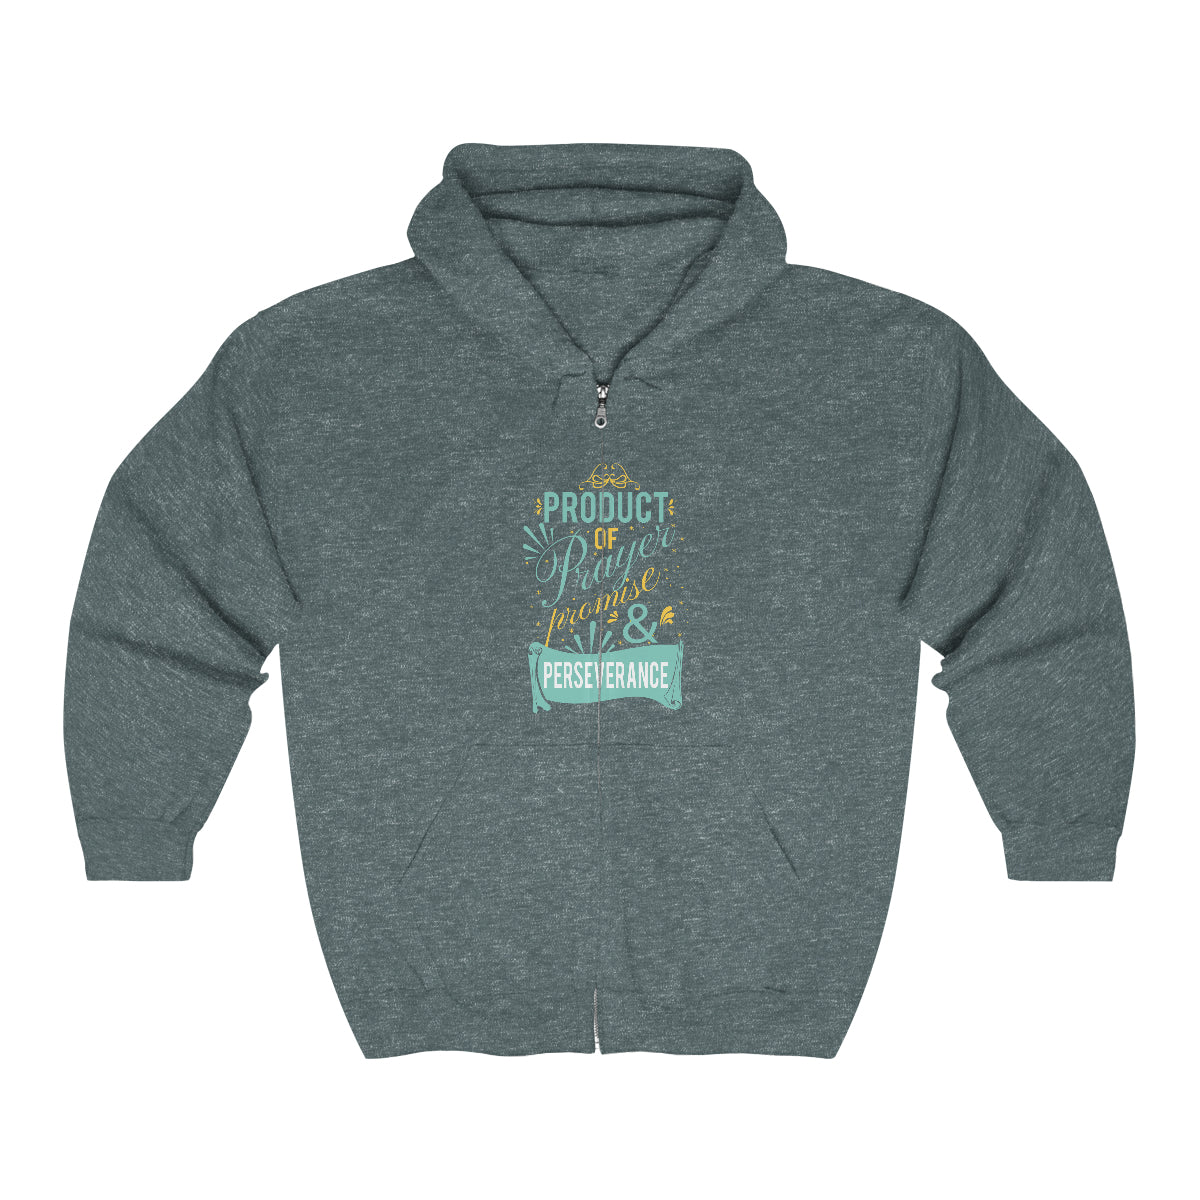 Product of Prayer, Promise, & Perseverance Unisex Heavy Blend Full Zip Hooded Sweatshirt Printify